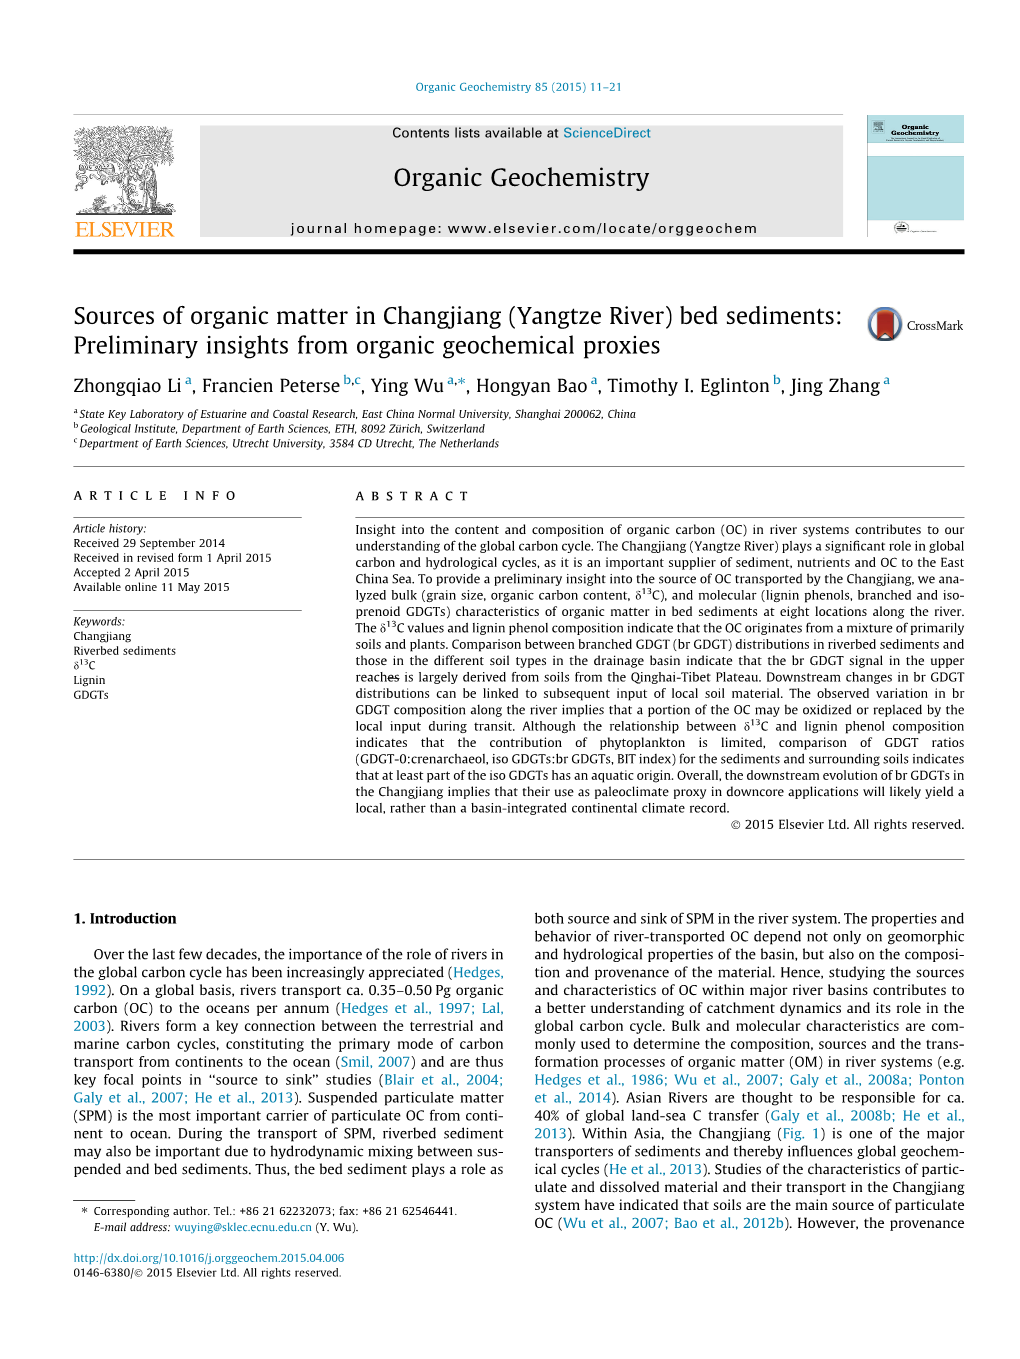 Bed Sediments: Preliminary Insights from Organic Geochemical Proxies ⇑ Zhongqiao Li A, Francien Peterse B,C, Ying Wu A, , Hongyan Bao A, Timothy I